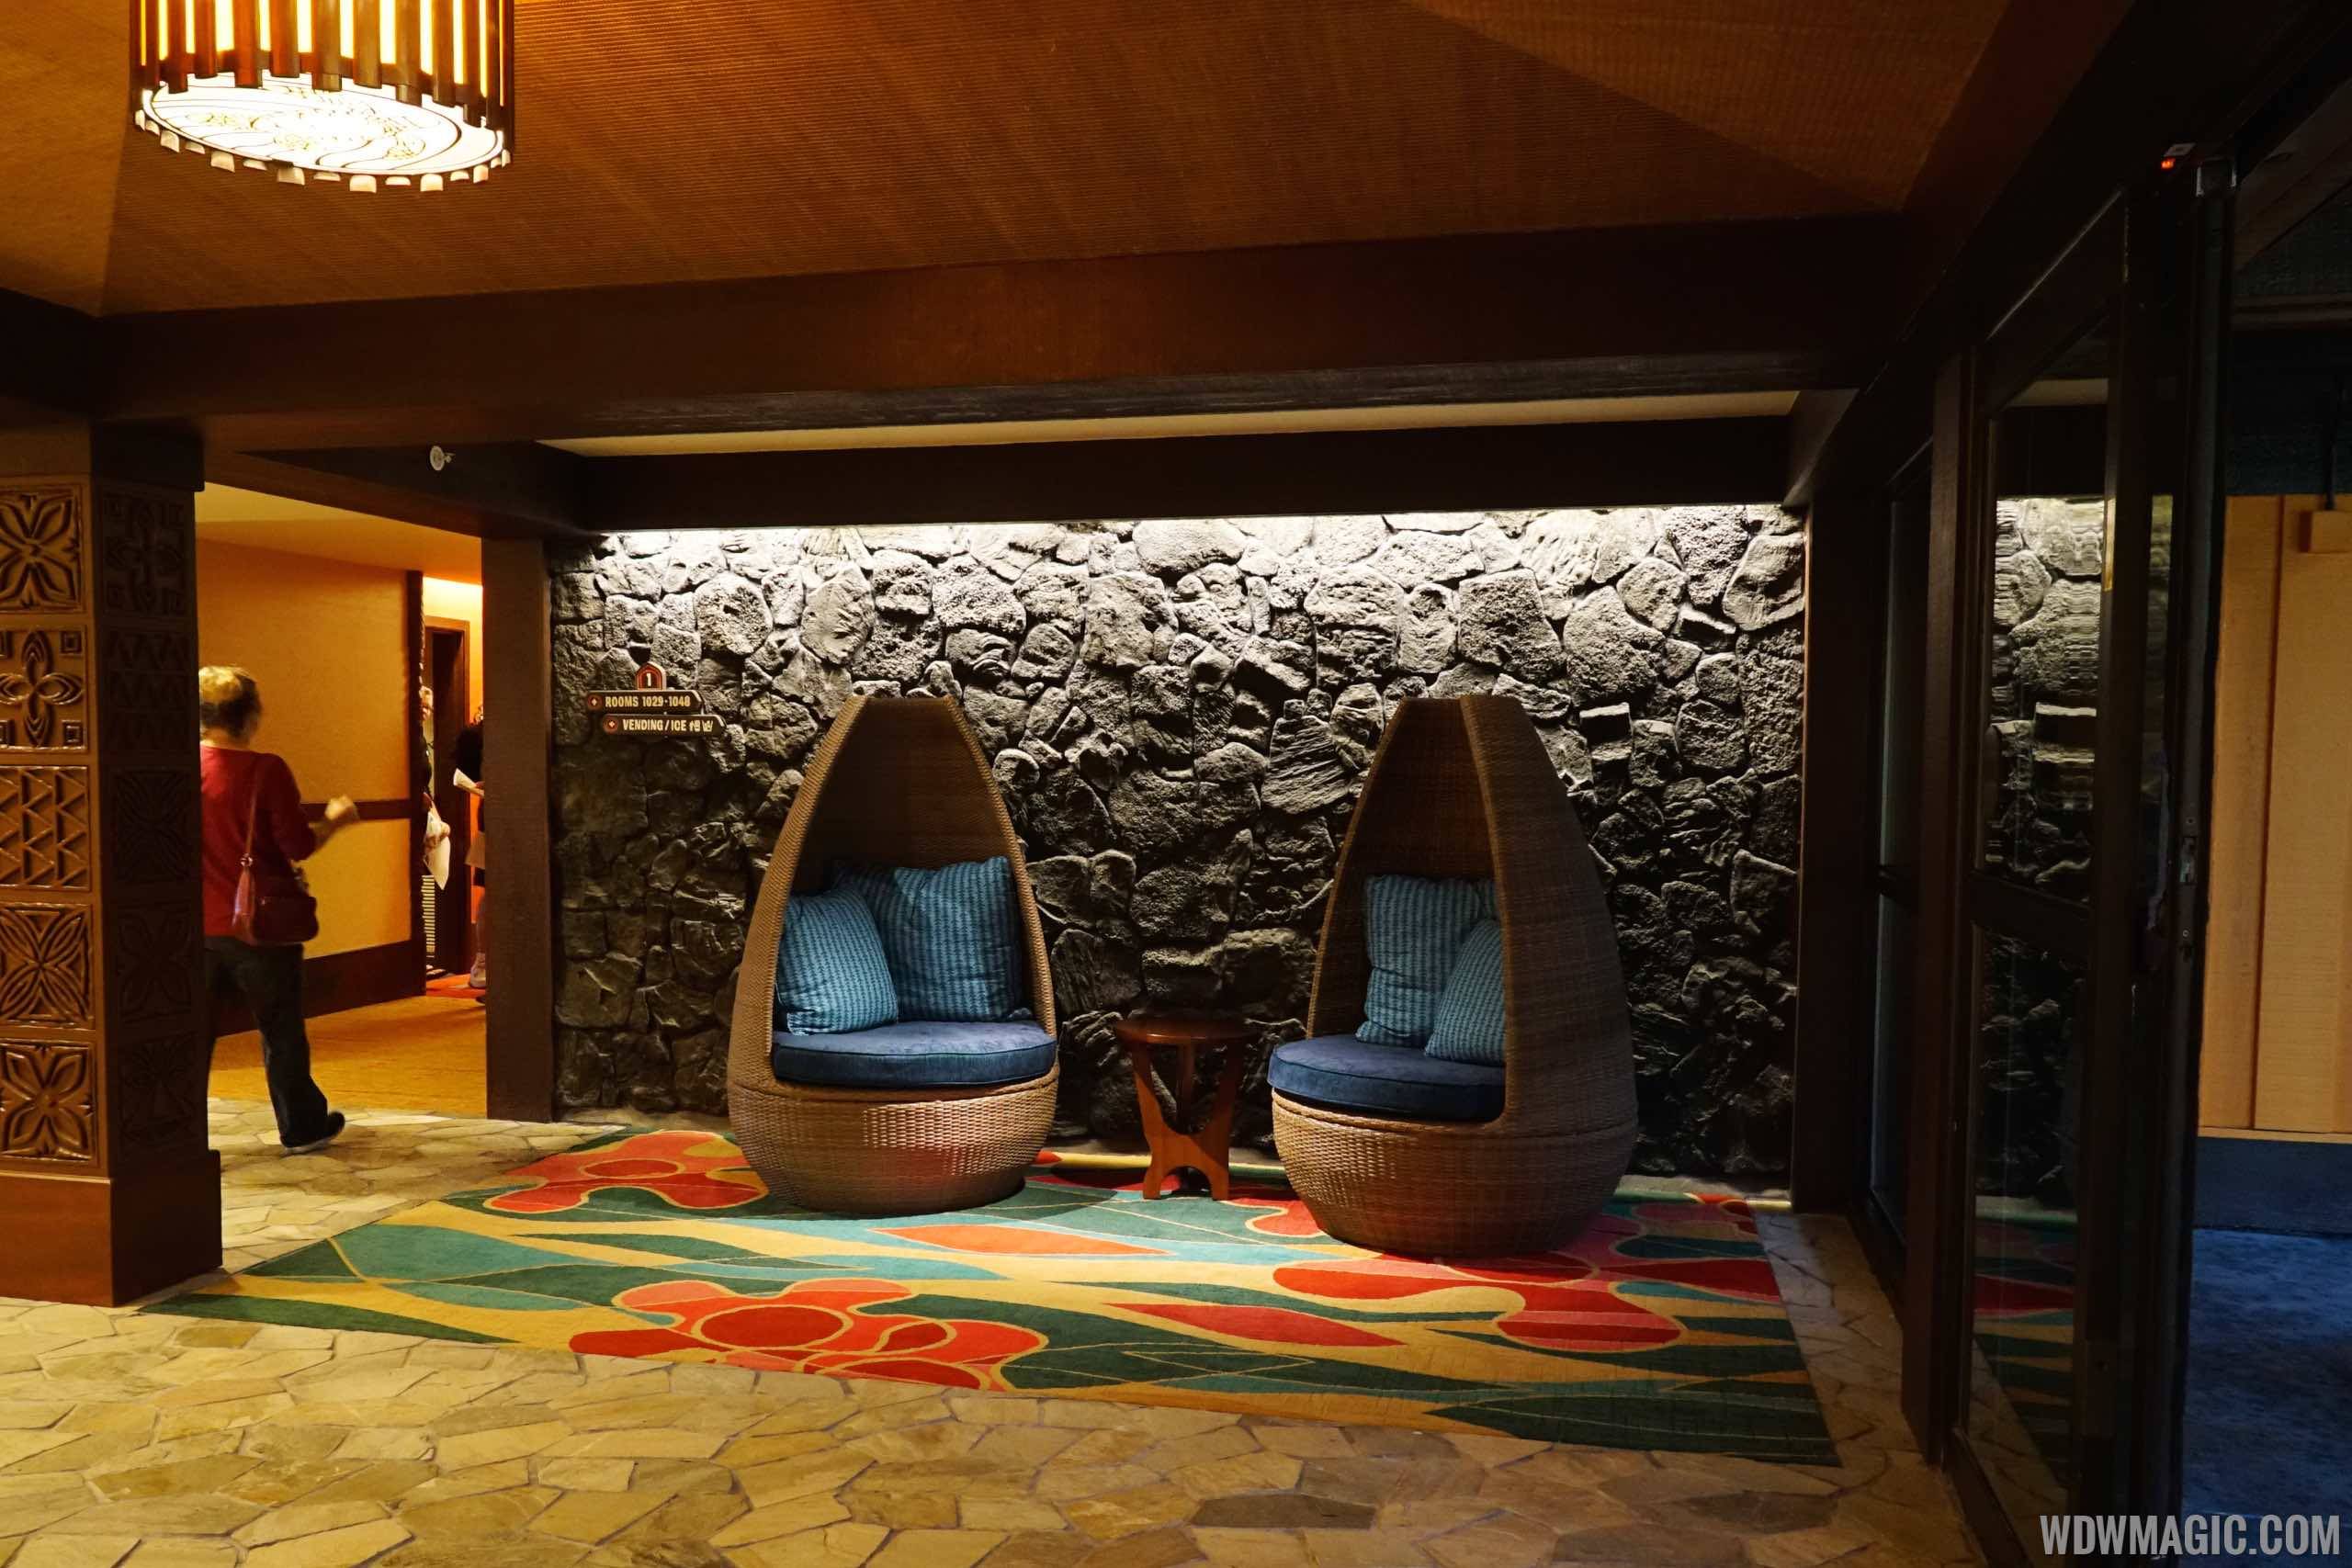 Tour inside a Disney's Polynesian Village Resort deluxe studio